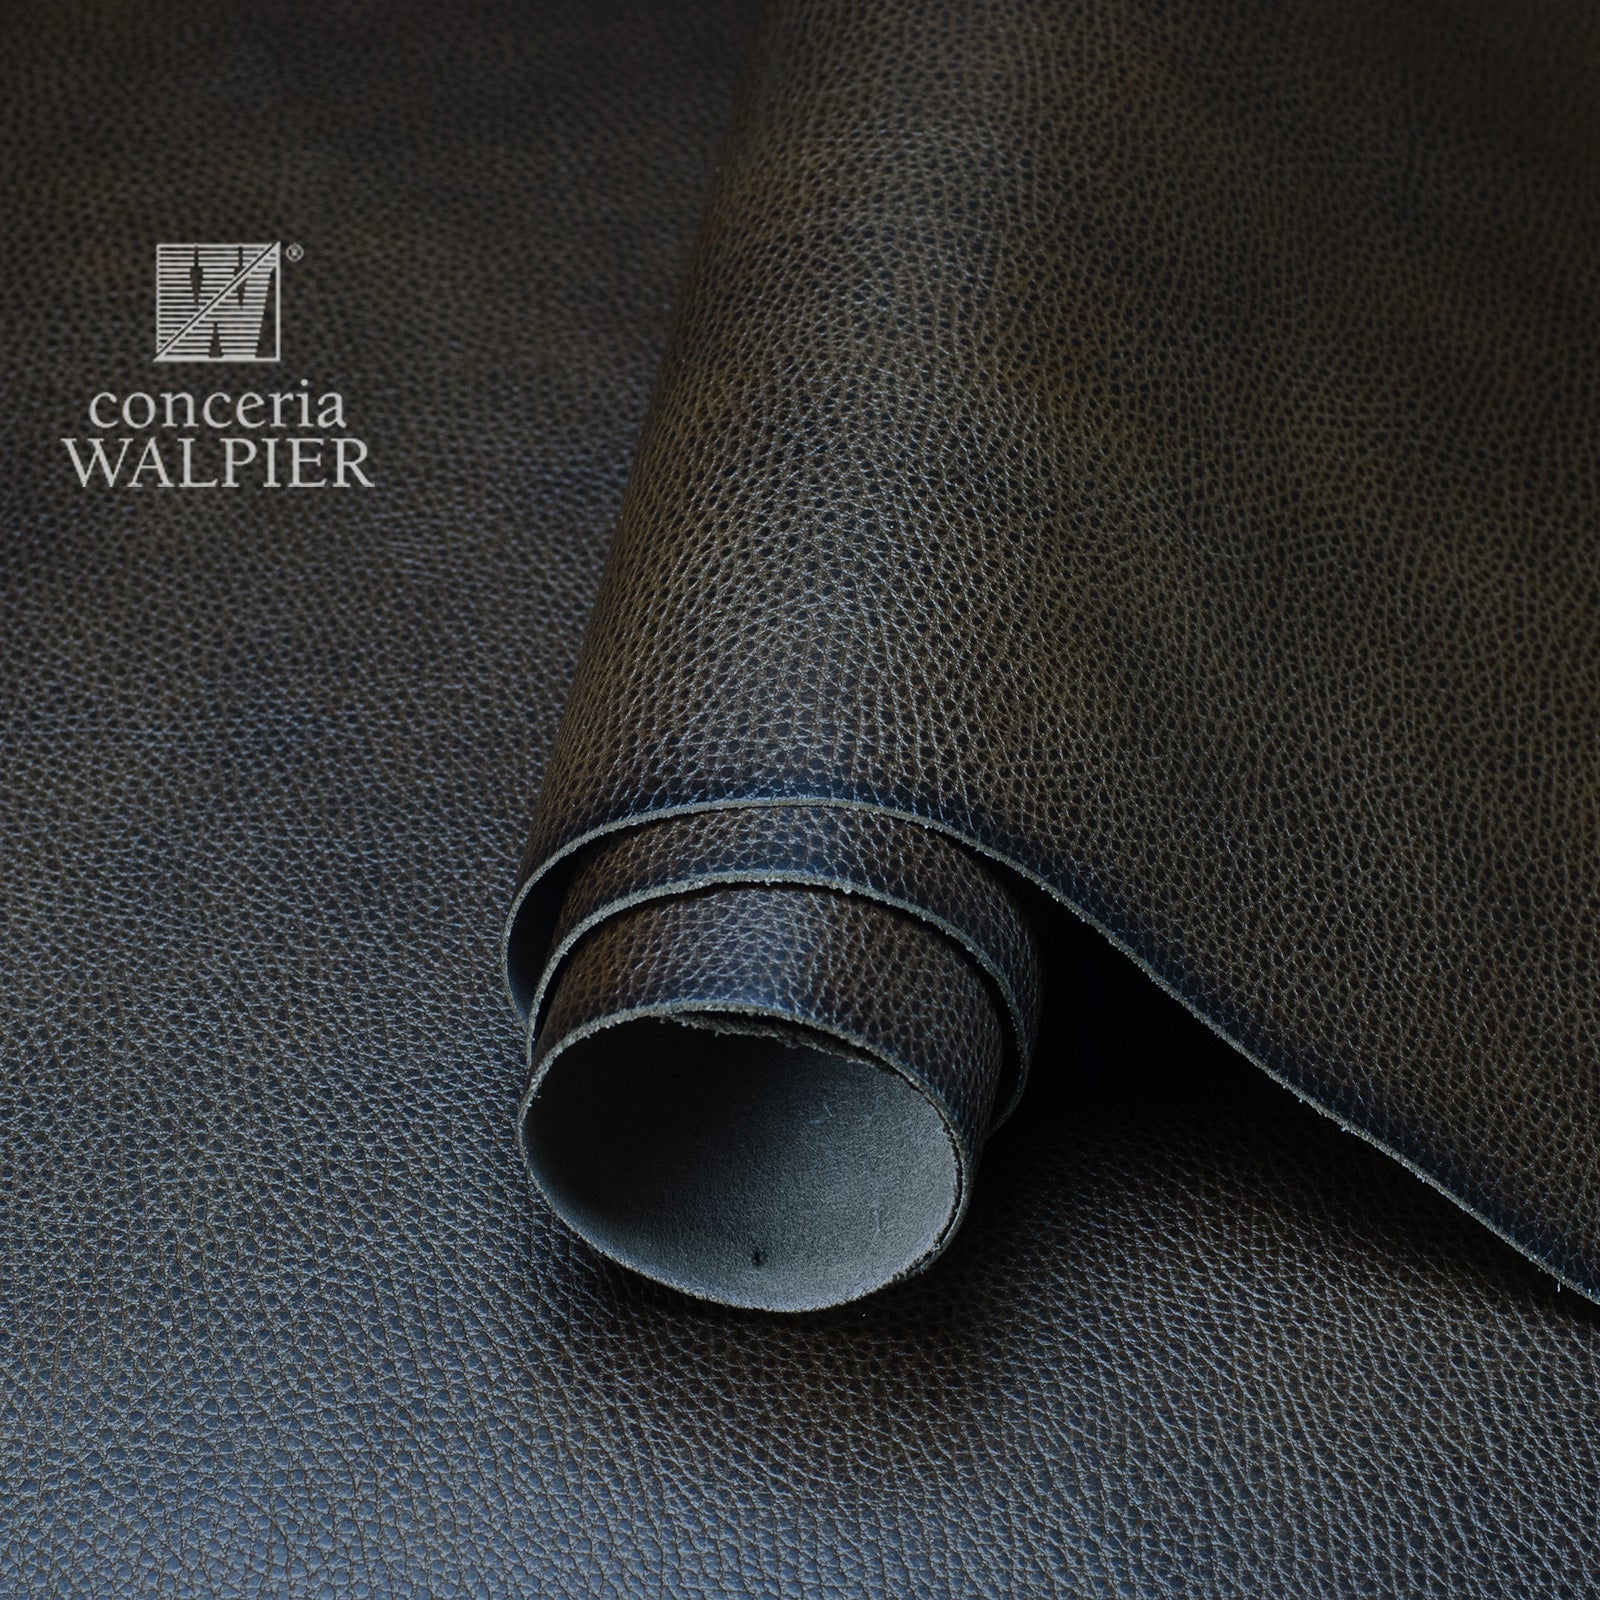 Conceria Walpier Dollaro Chocolate Leather Shoulders